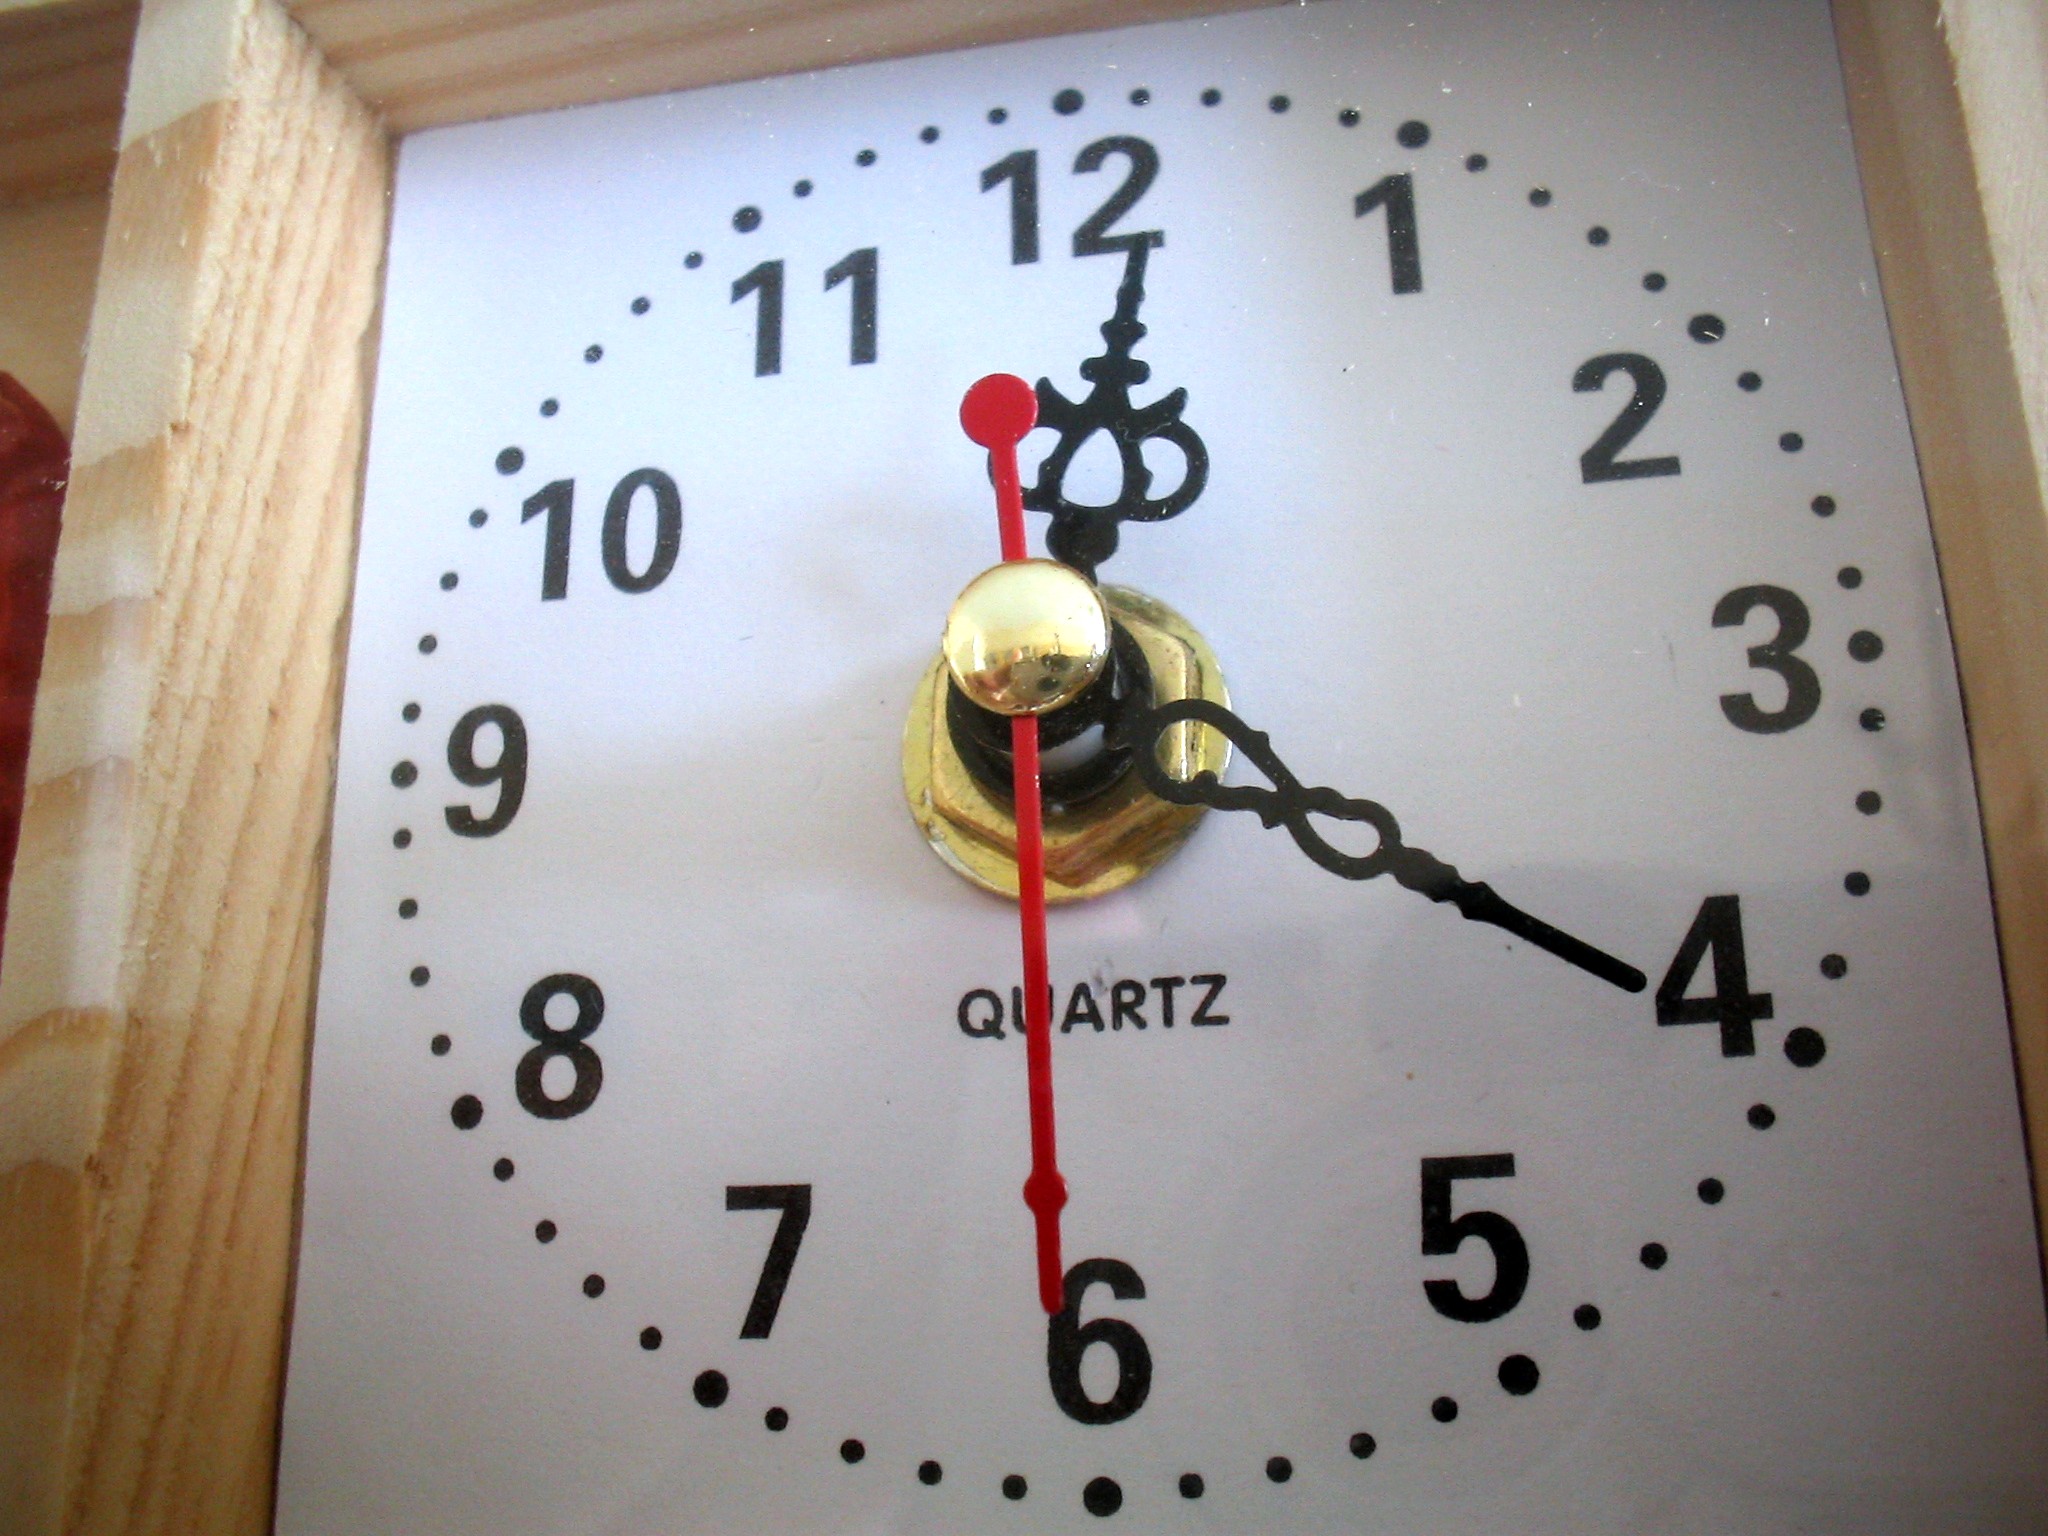 quartz watch accuracy